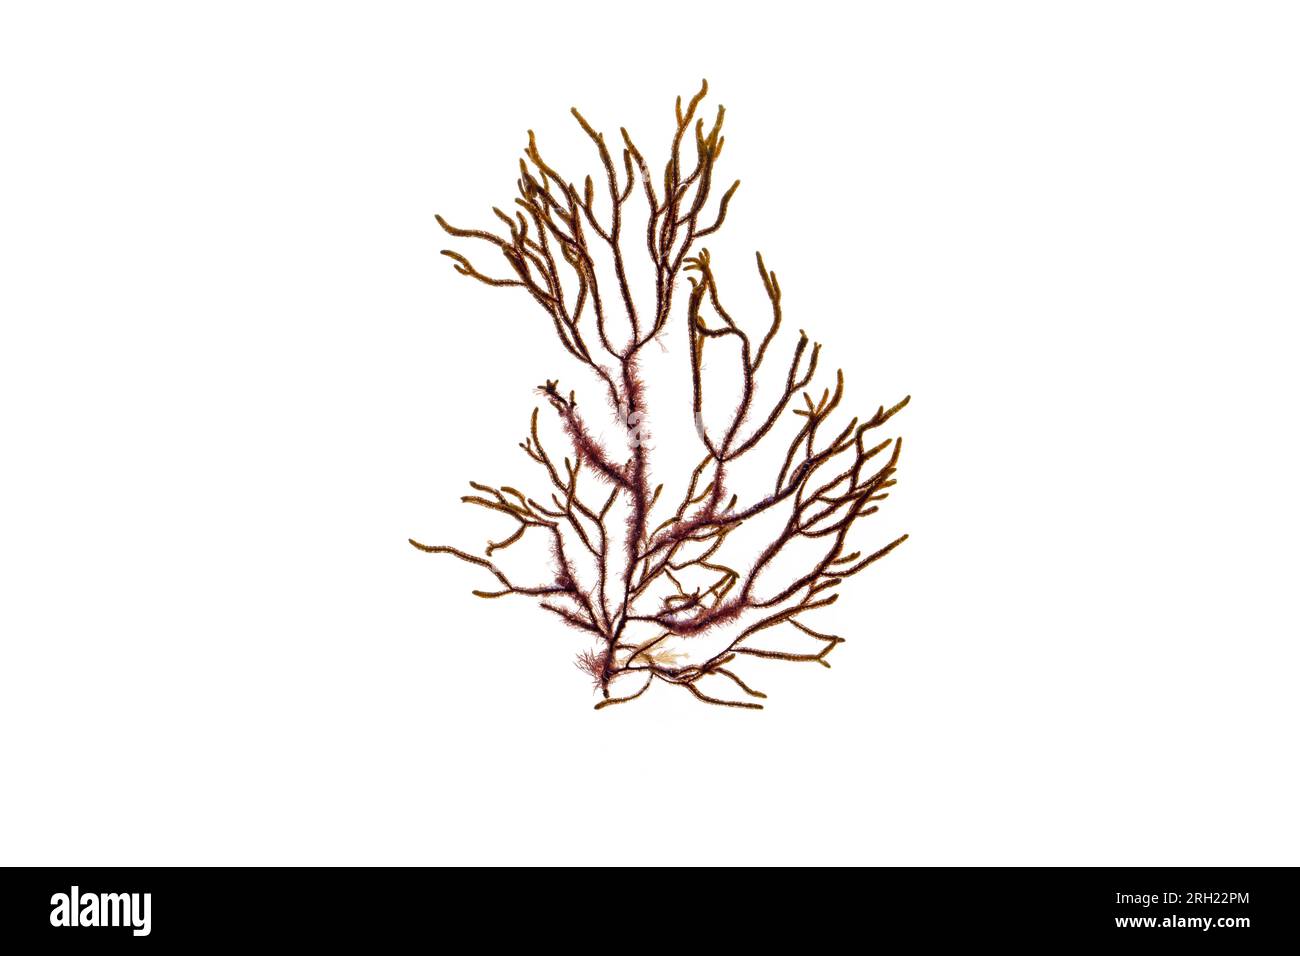 Cladostephus spongiosus with coralline alga Jania rubens growing as an epiphyte at the base of the fronds. Cladostephus verticillatus brown algae isol Stock Photo